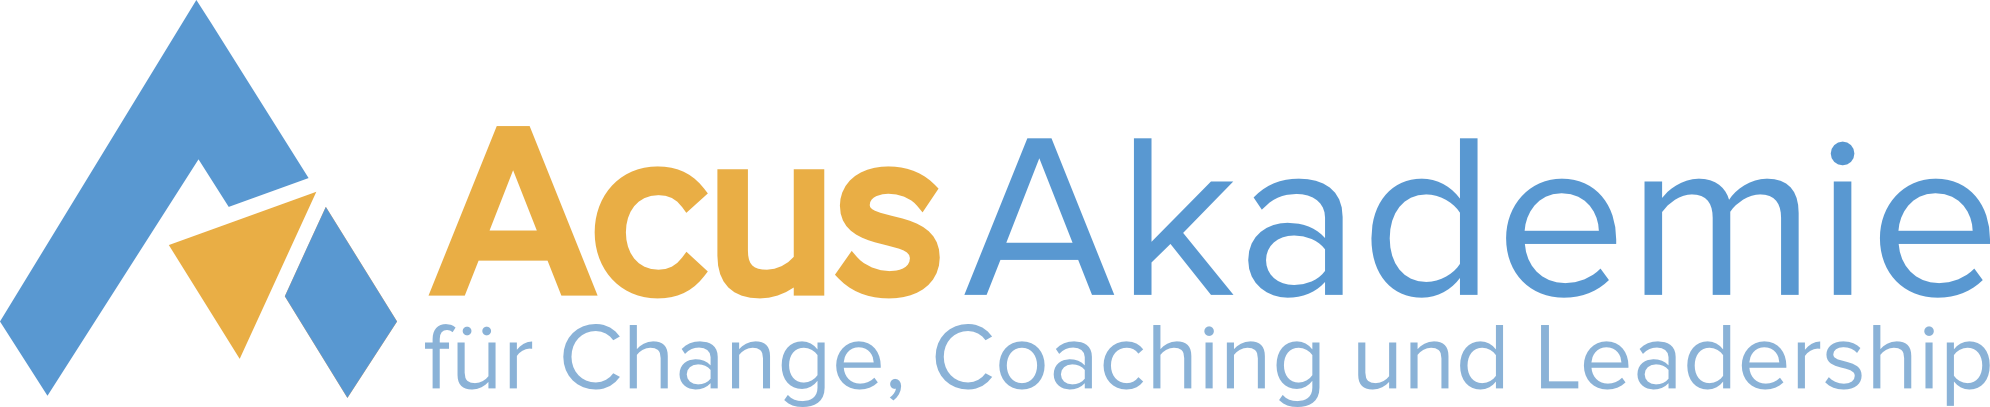 Logo Acus Akademie.png